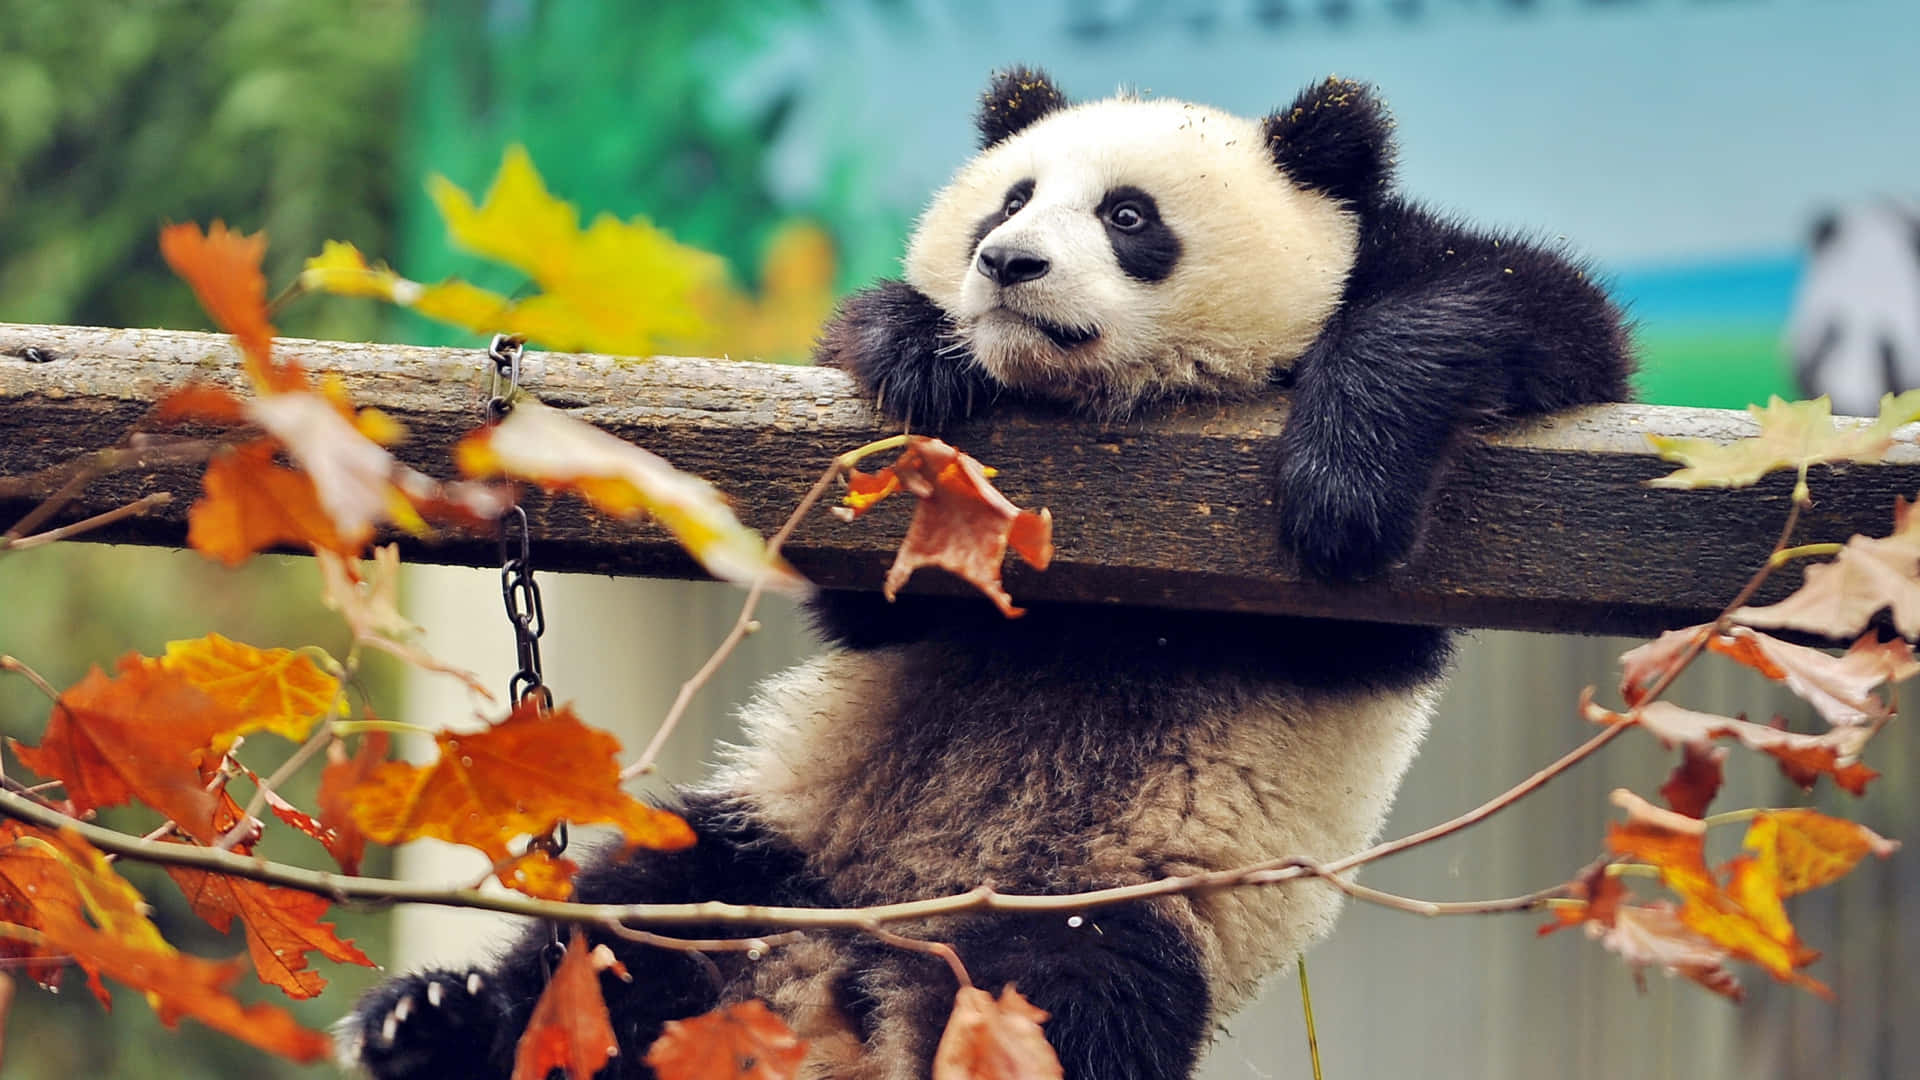 Panda Bear Is Hanging On A Wooden Branch Wallpaper